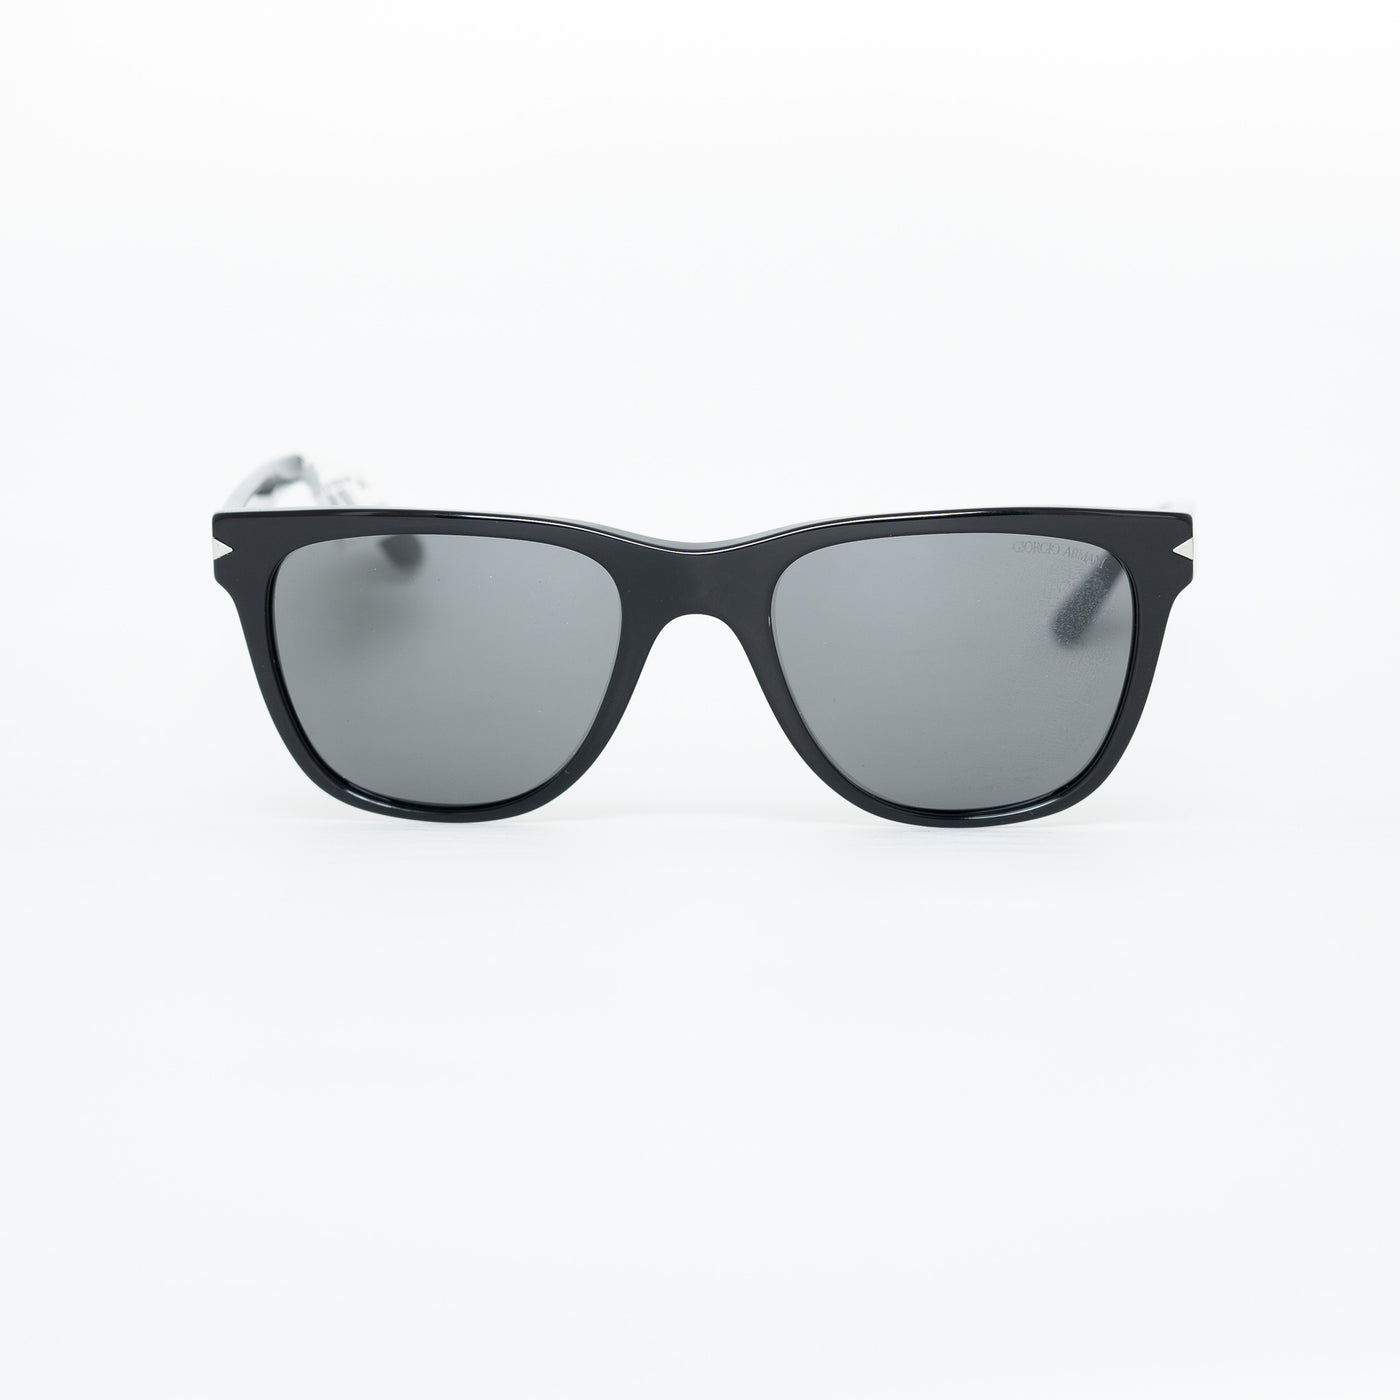 Giorgio Armani AR8133/5001/87 | Sunglasses - Vision Express Optical Philippines